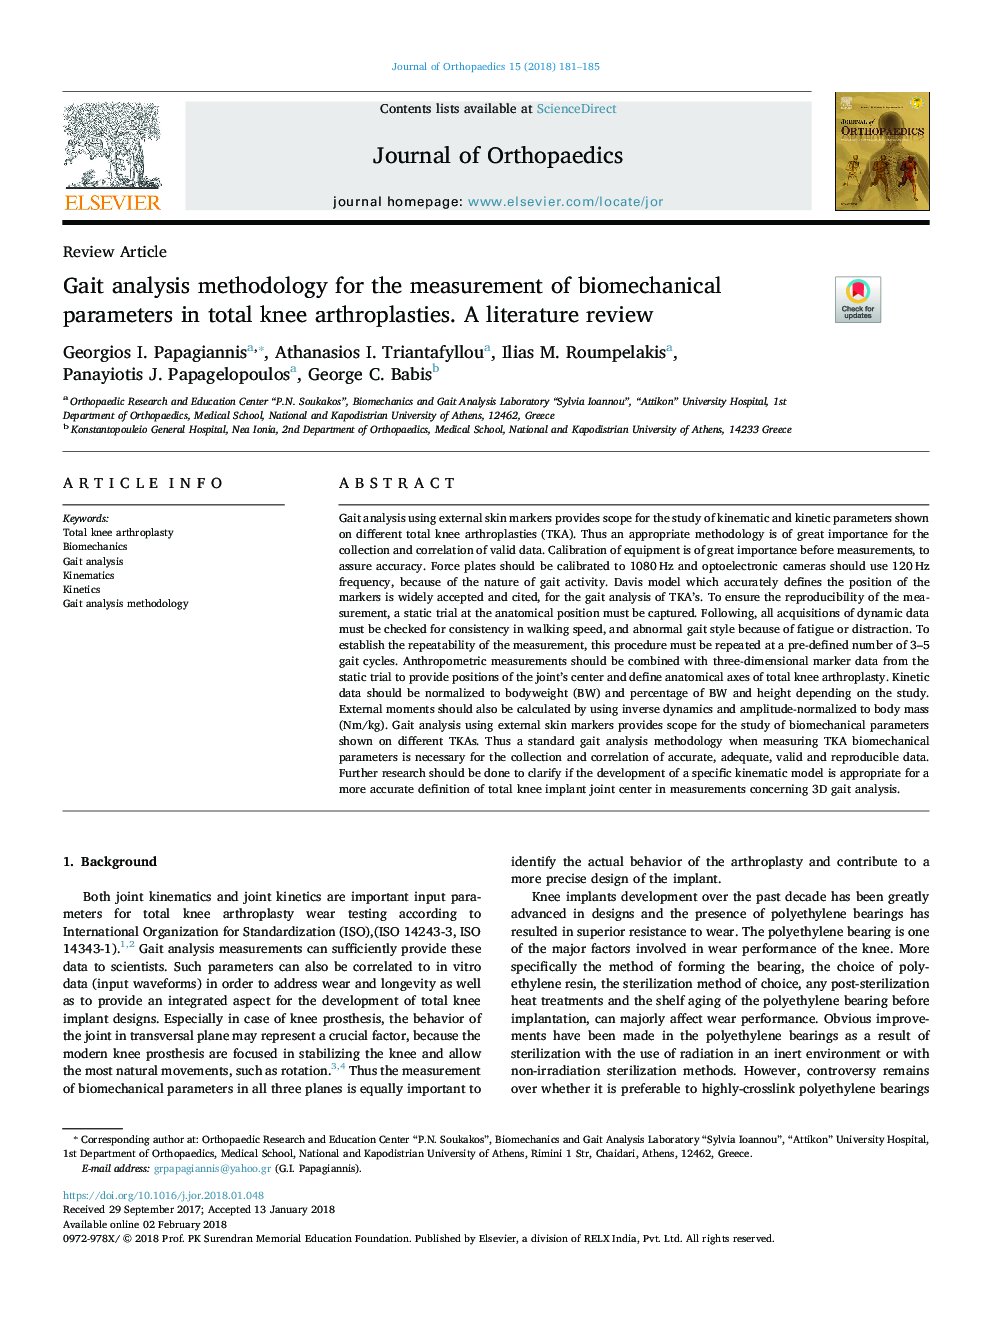 Gait analysis methodology for the measurement of biomechanical parameters in total knee arthroplasties. A literature review